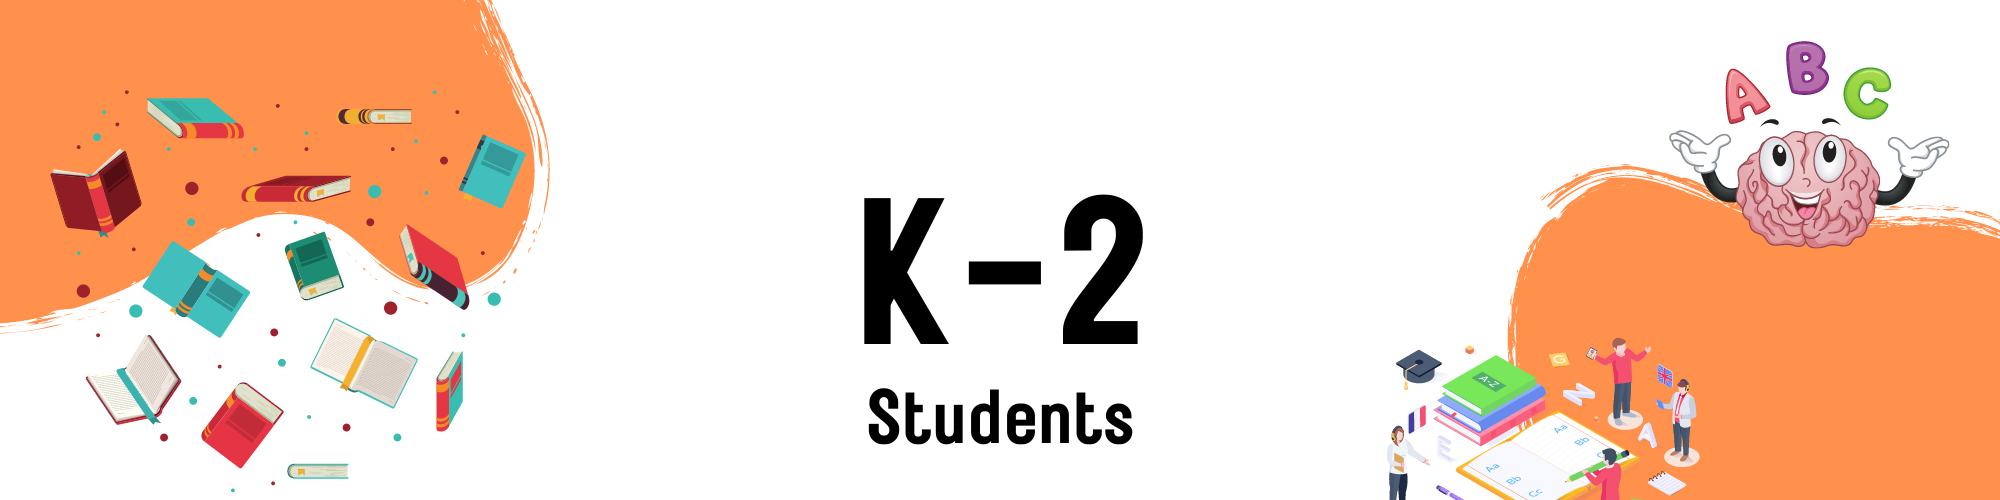 K-2 Students